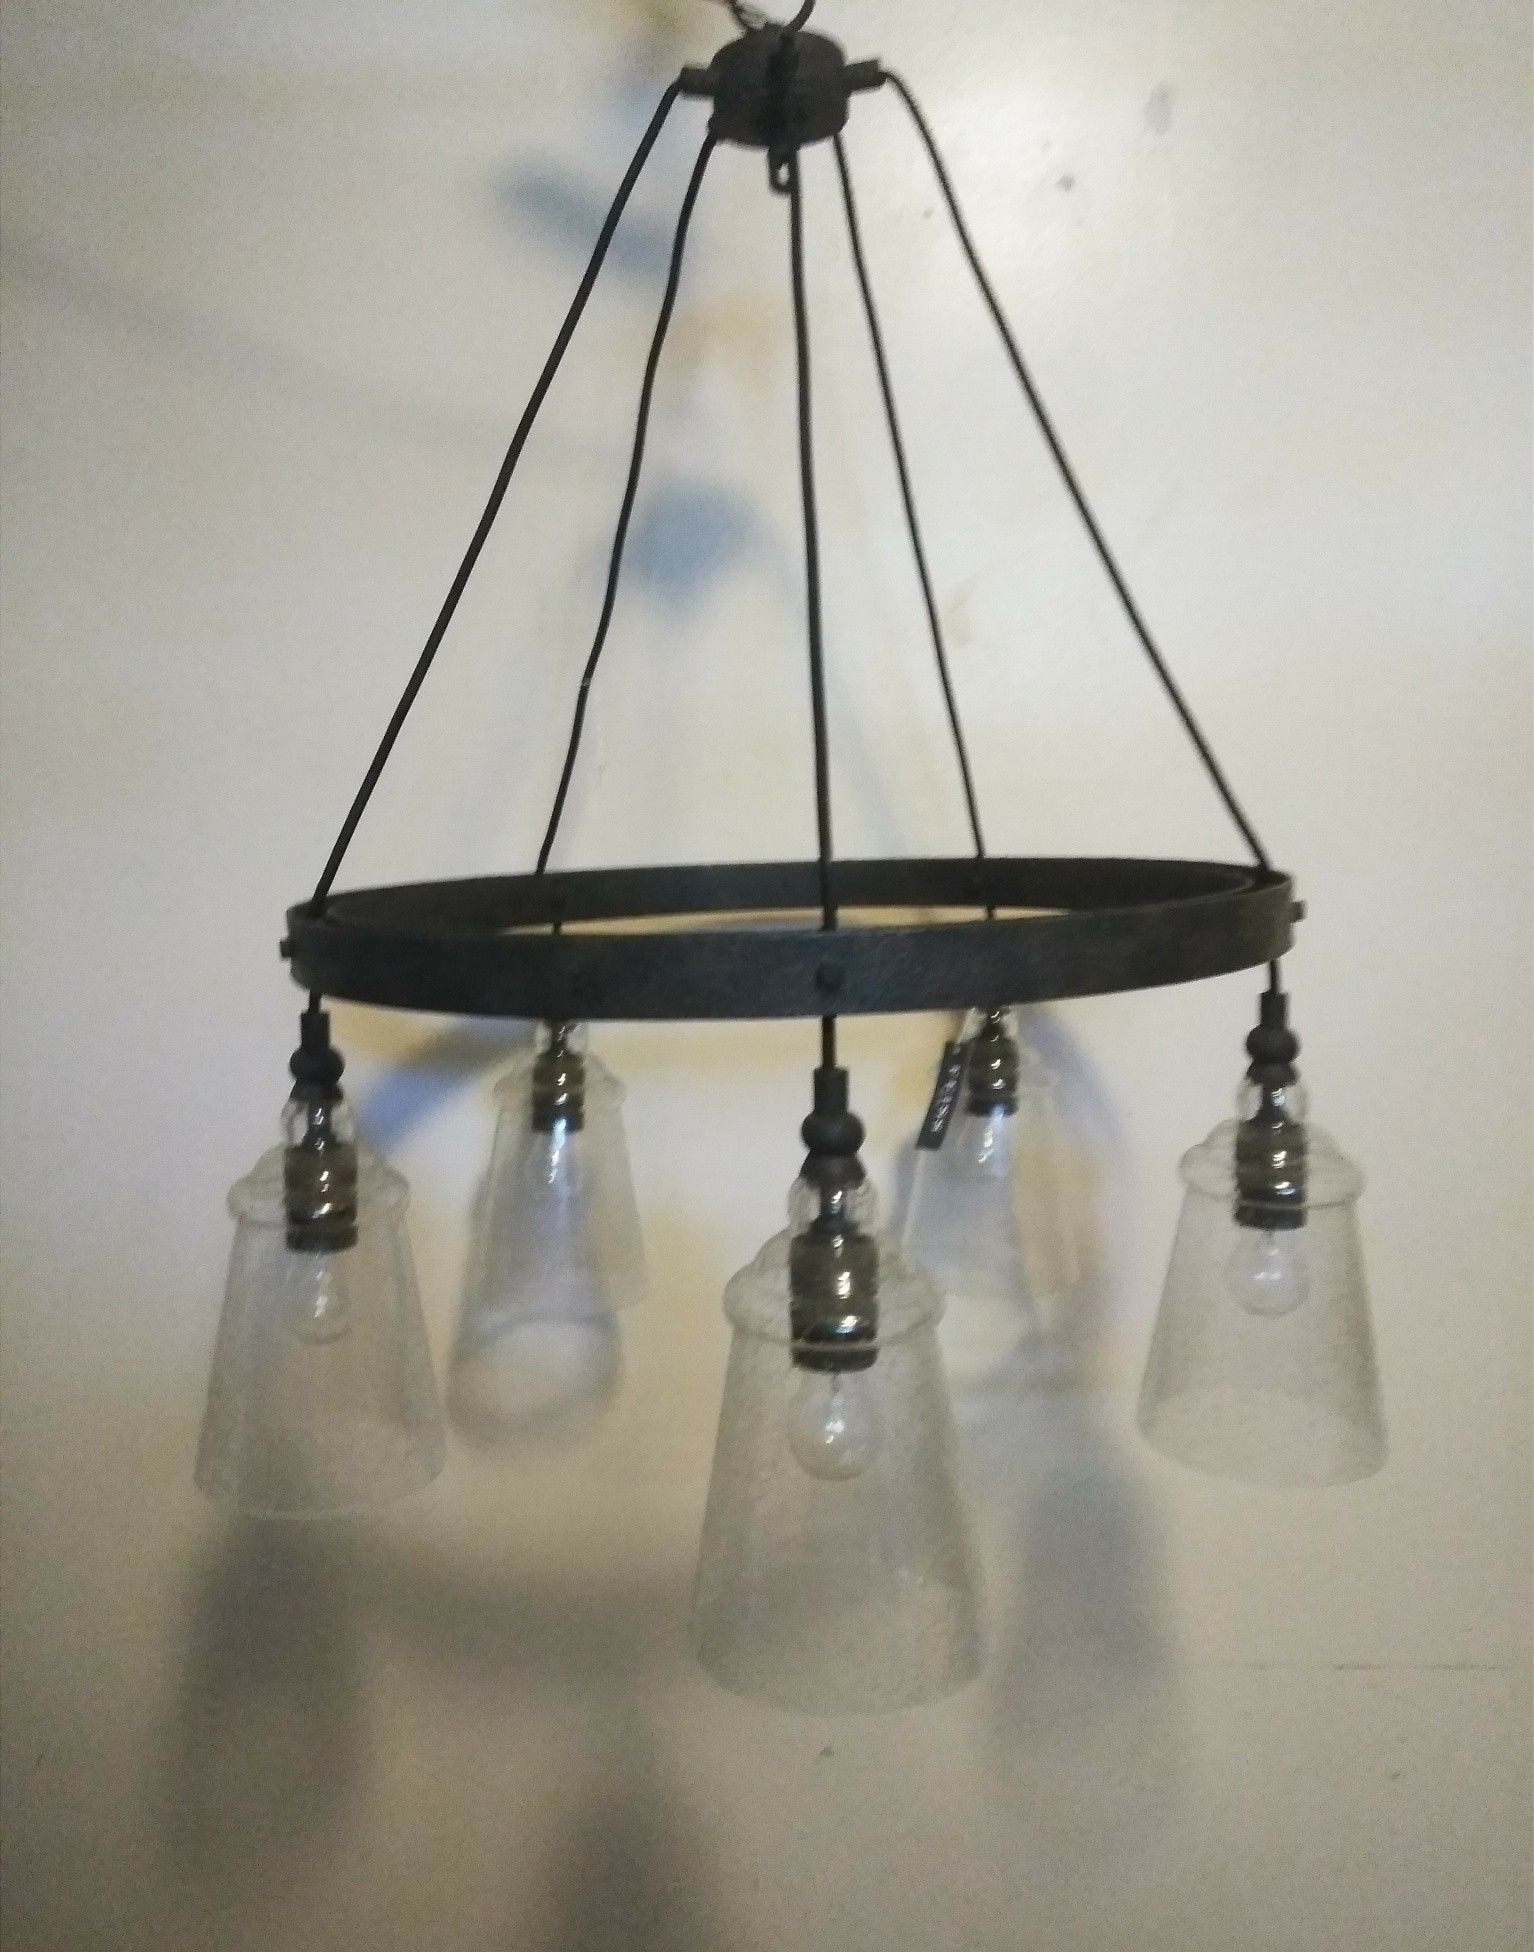 Farm style hanging light fixture